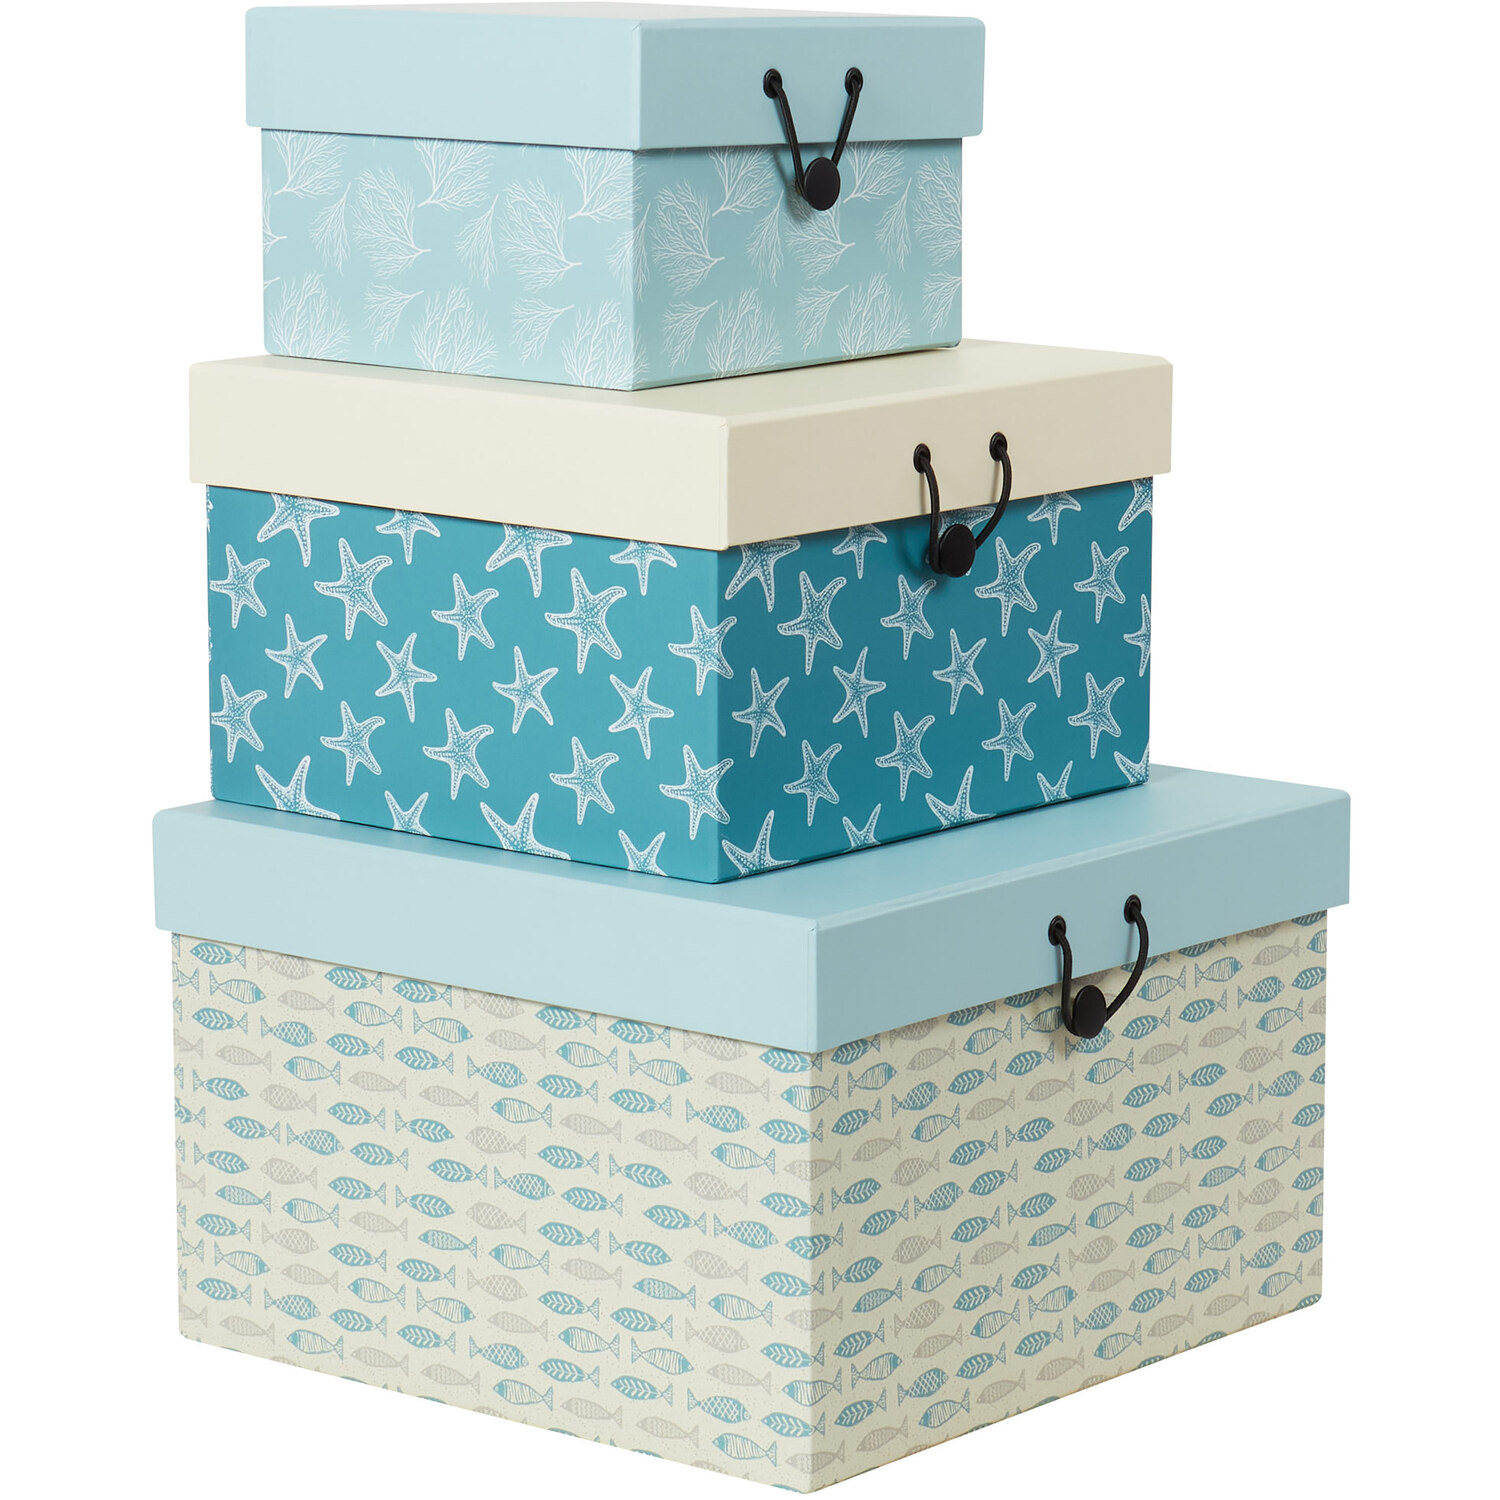 Set of 3 Coastal Print Boxes - Blue Image 1